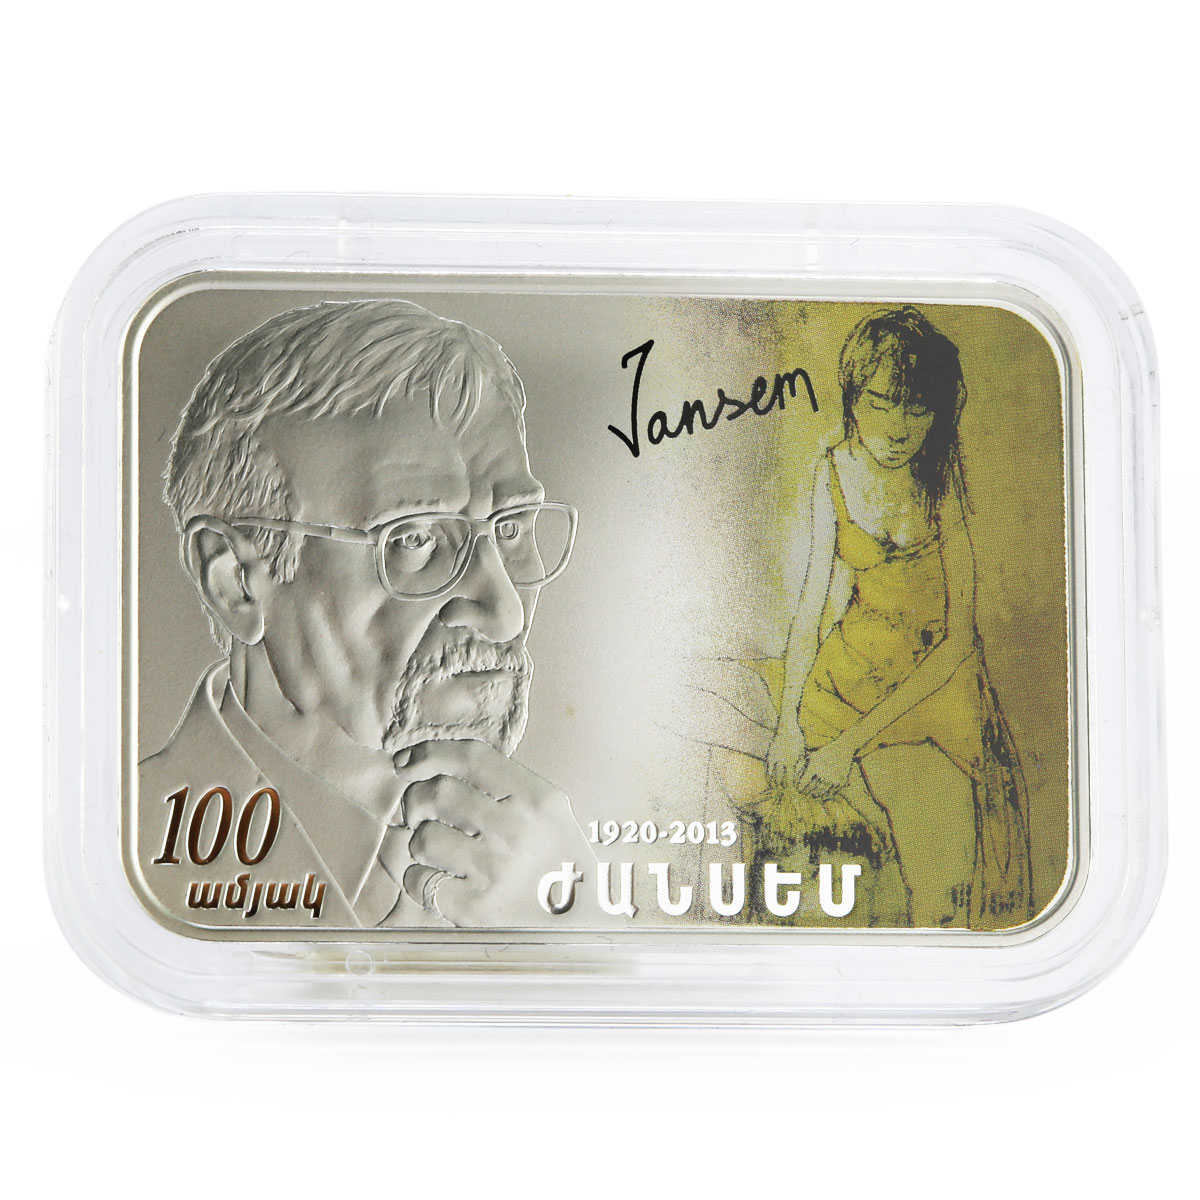 Armenia 100 dram 100th Anniversary of the Painter Jansem silver coin 2020